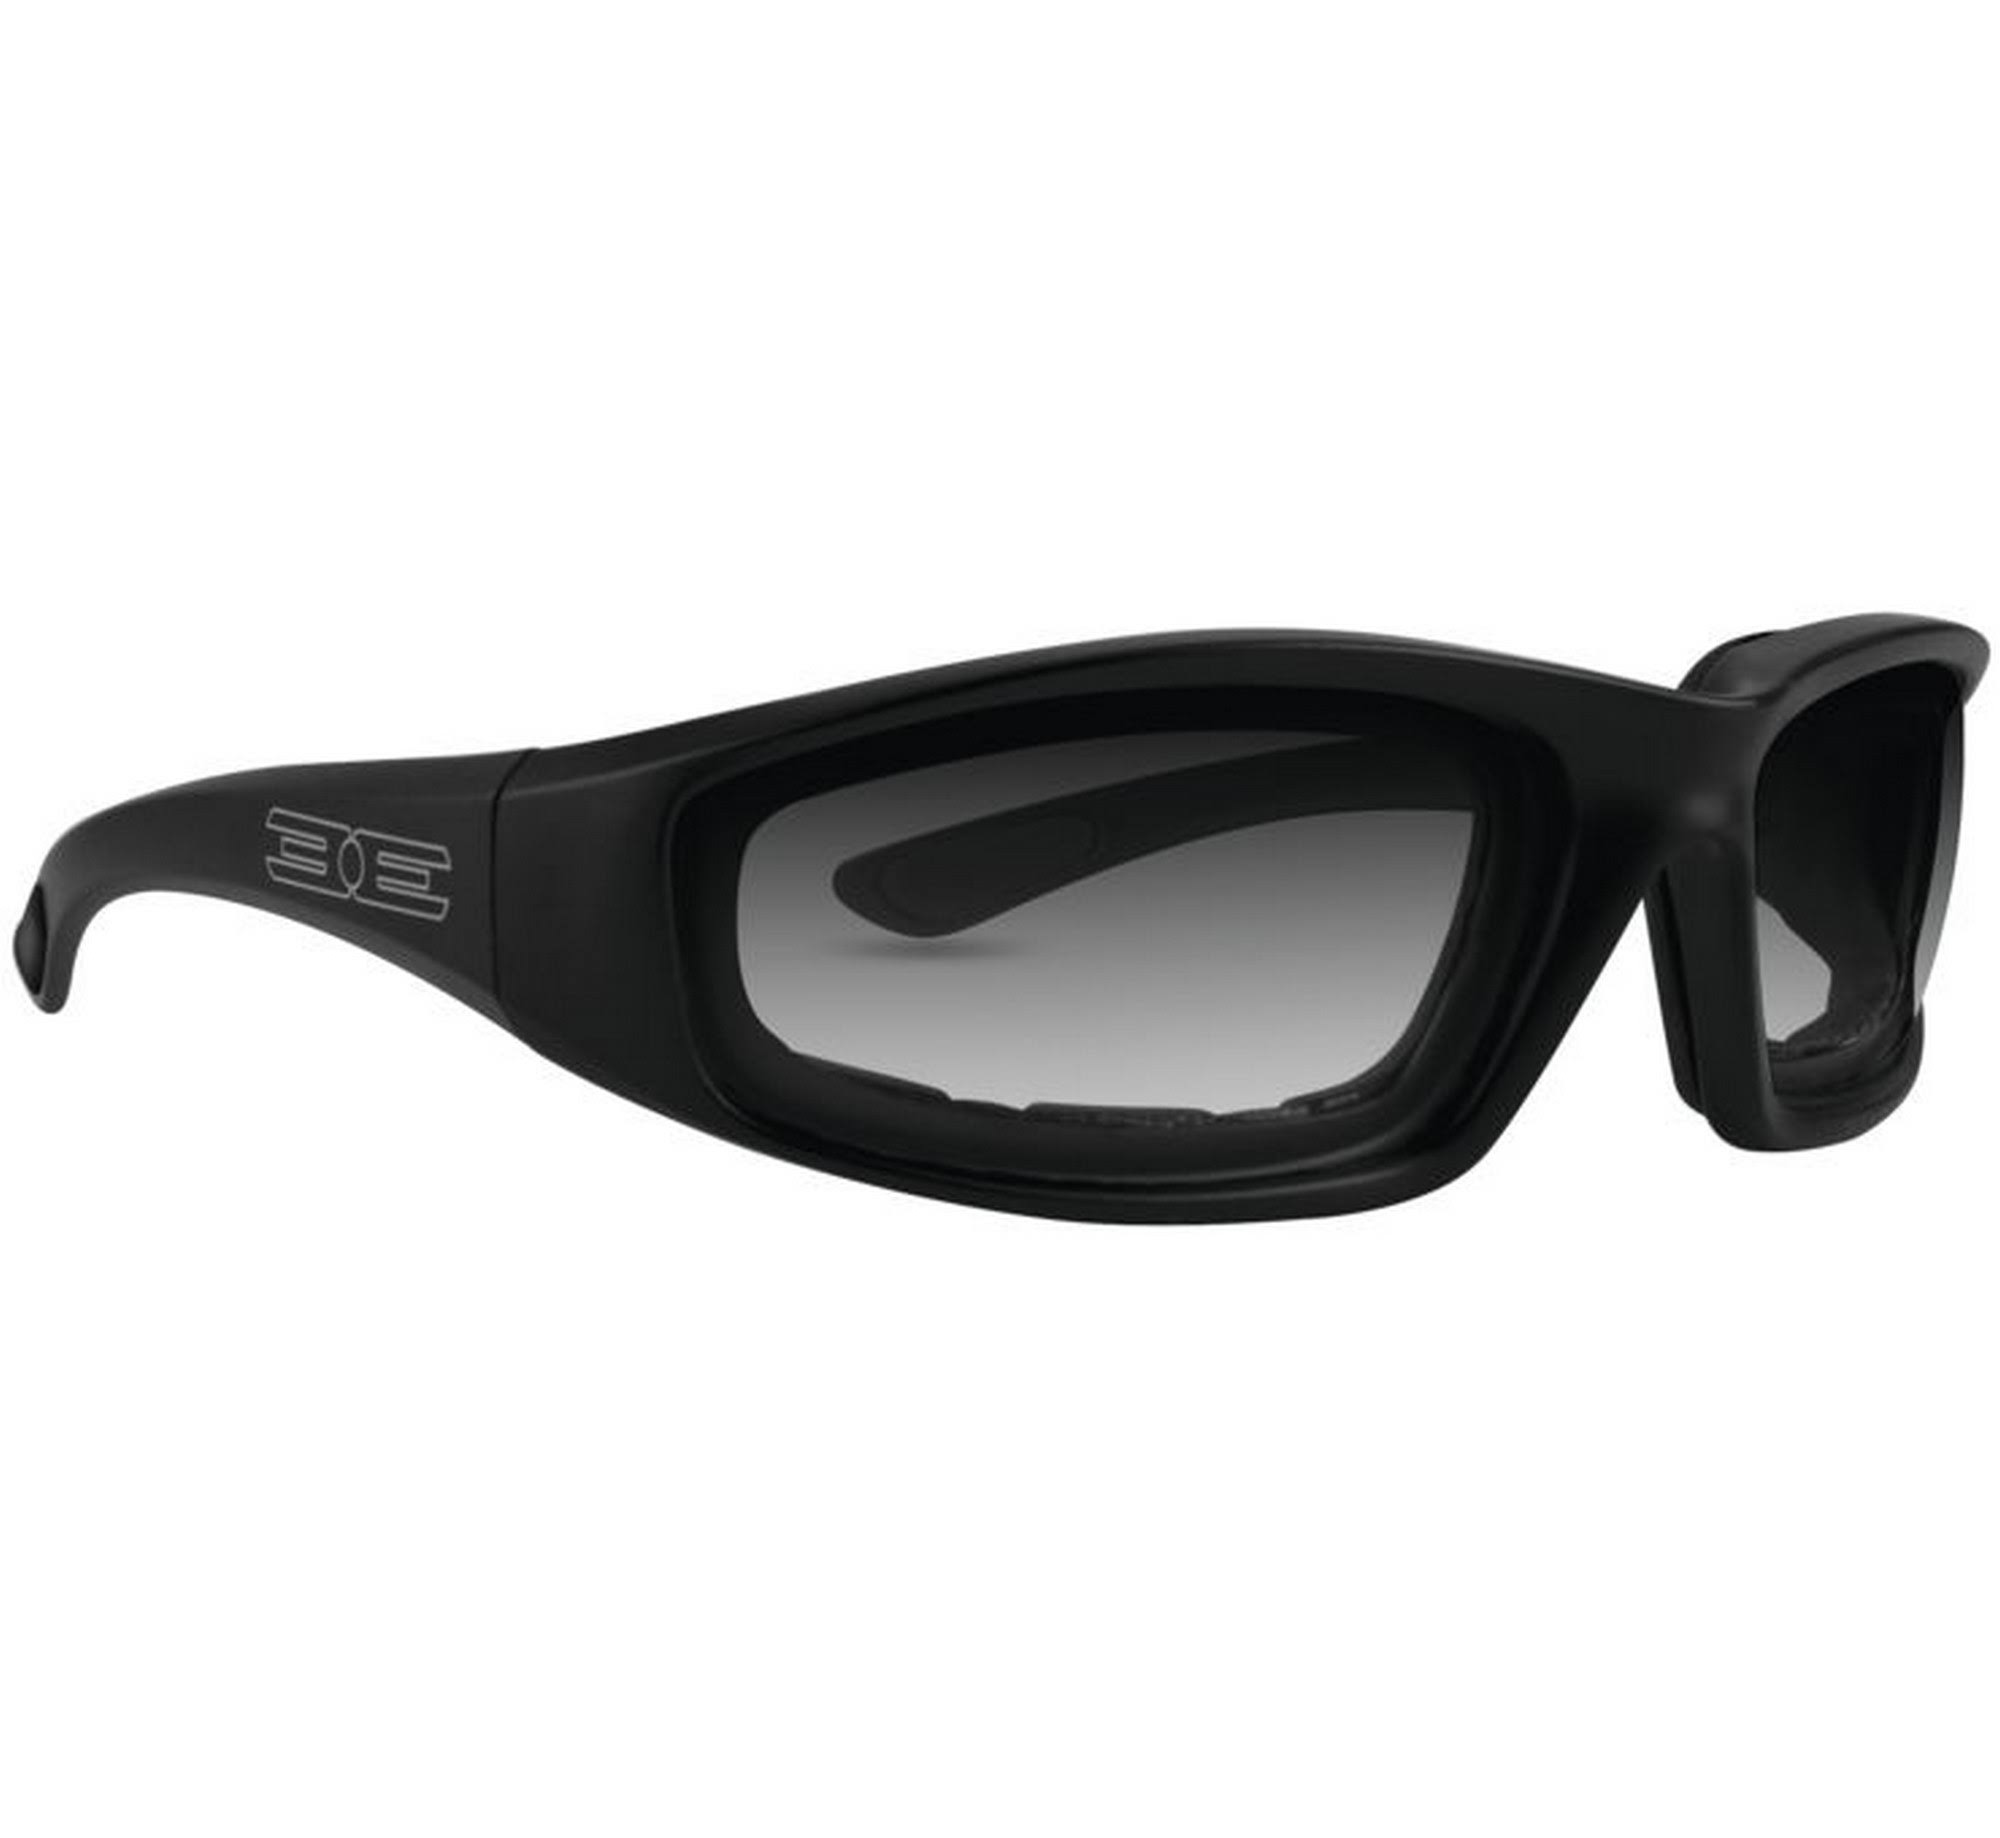 Epoch Foam Padded Photochromic Motorcycle Sunglasses - Black Frame/Clear Lens